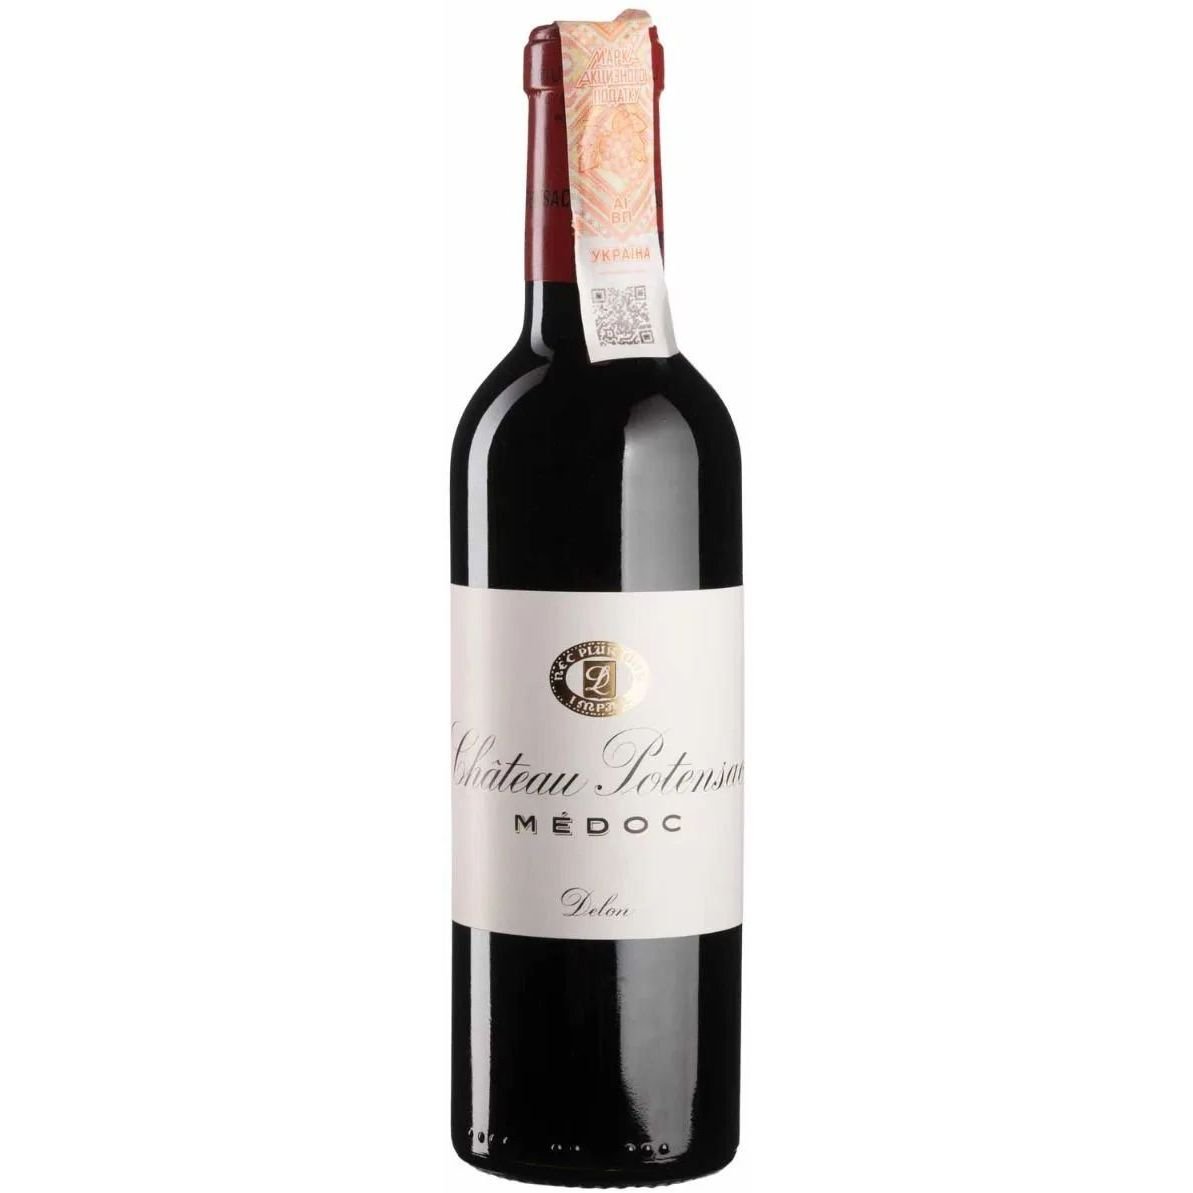 Вино Chateau Potensac 2014 Medoc AOC красное сухое, 0.375 л - фото 1